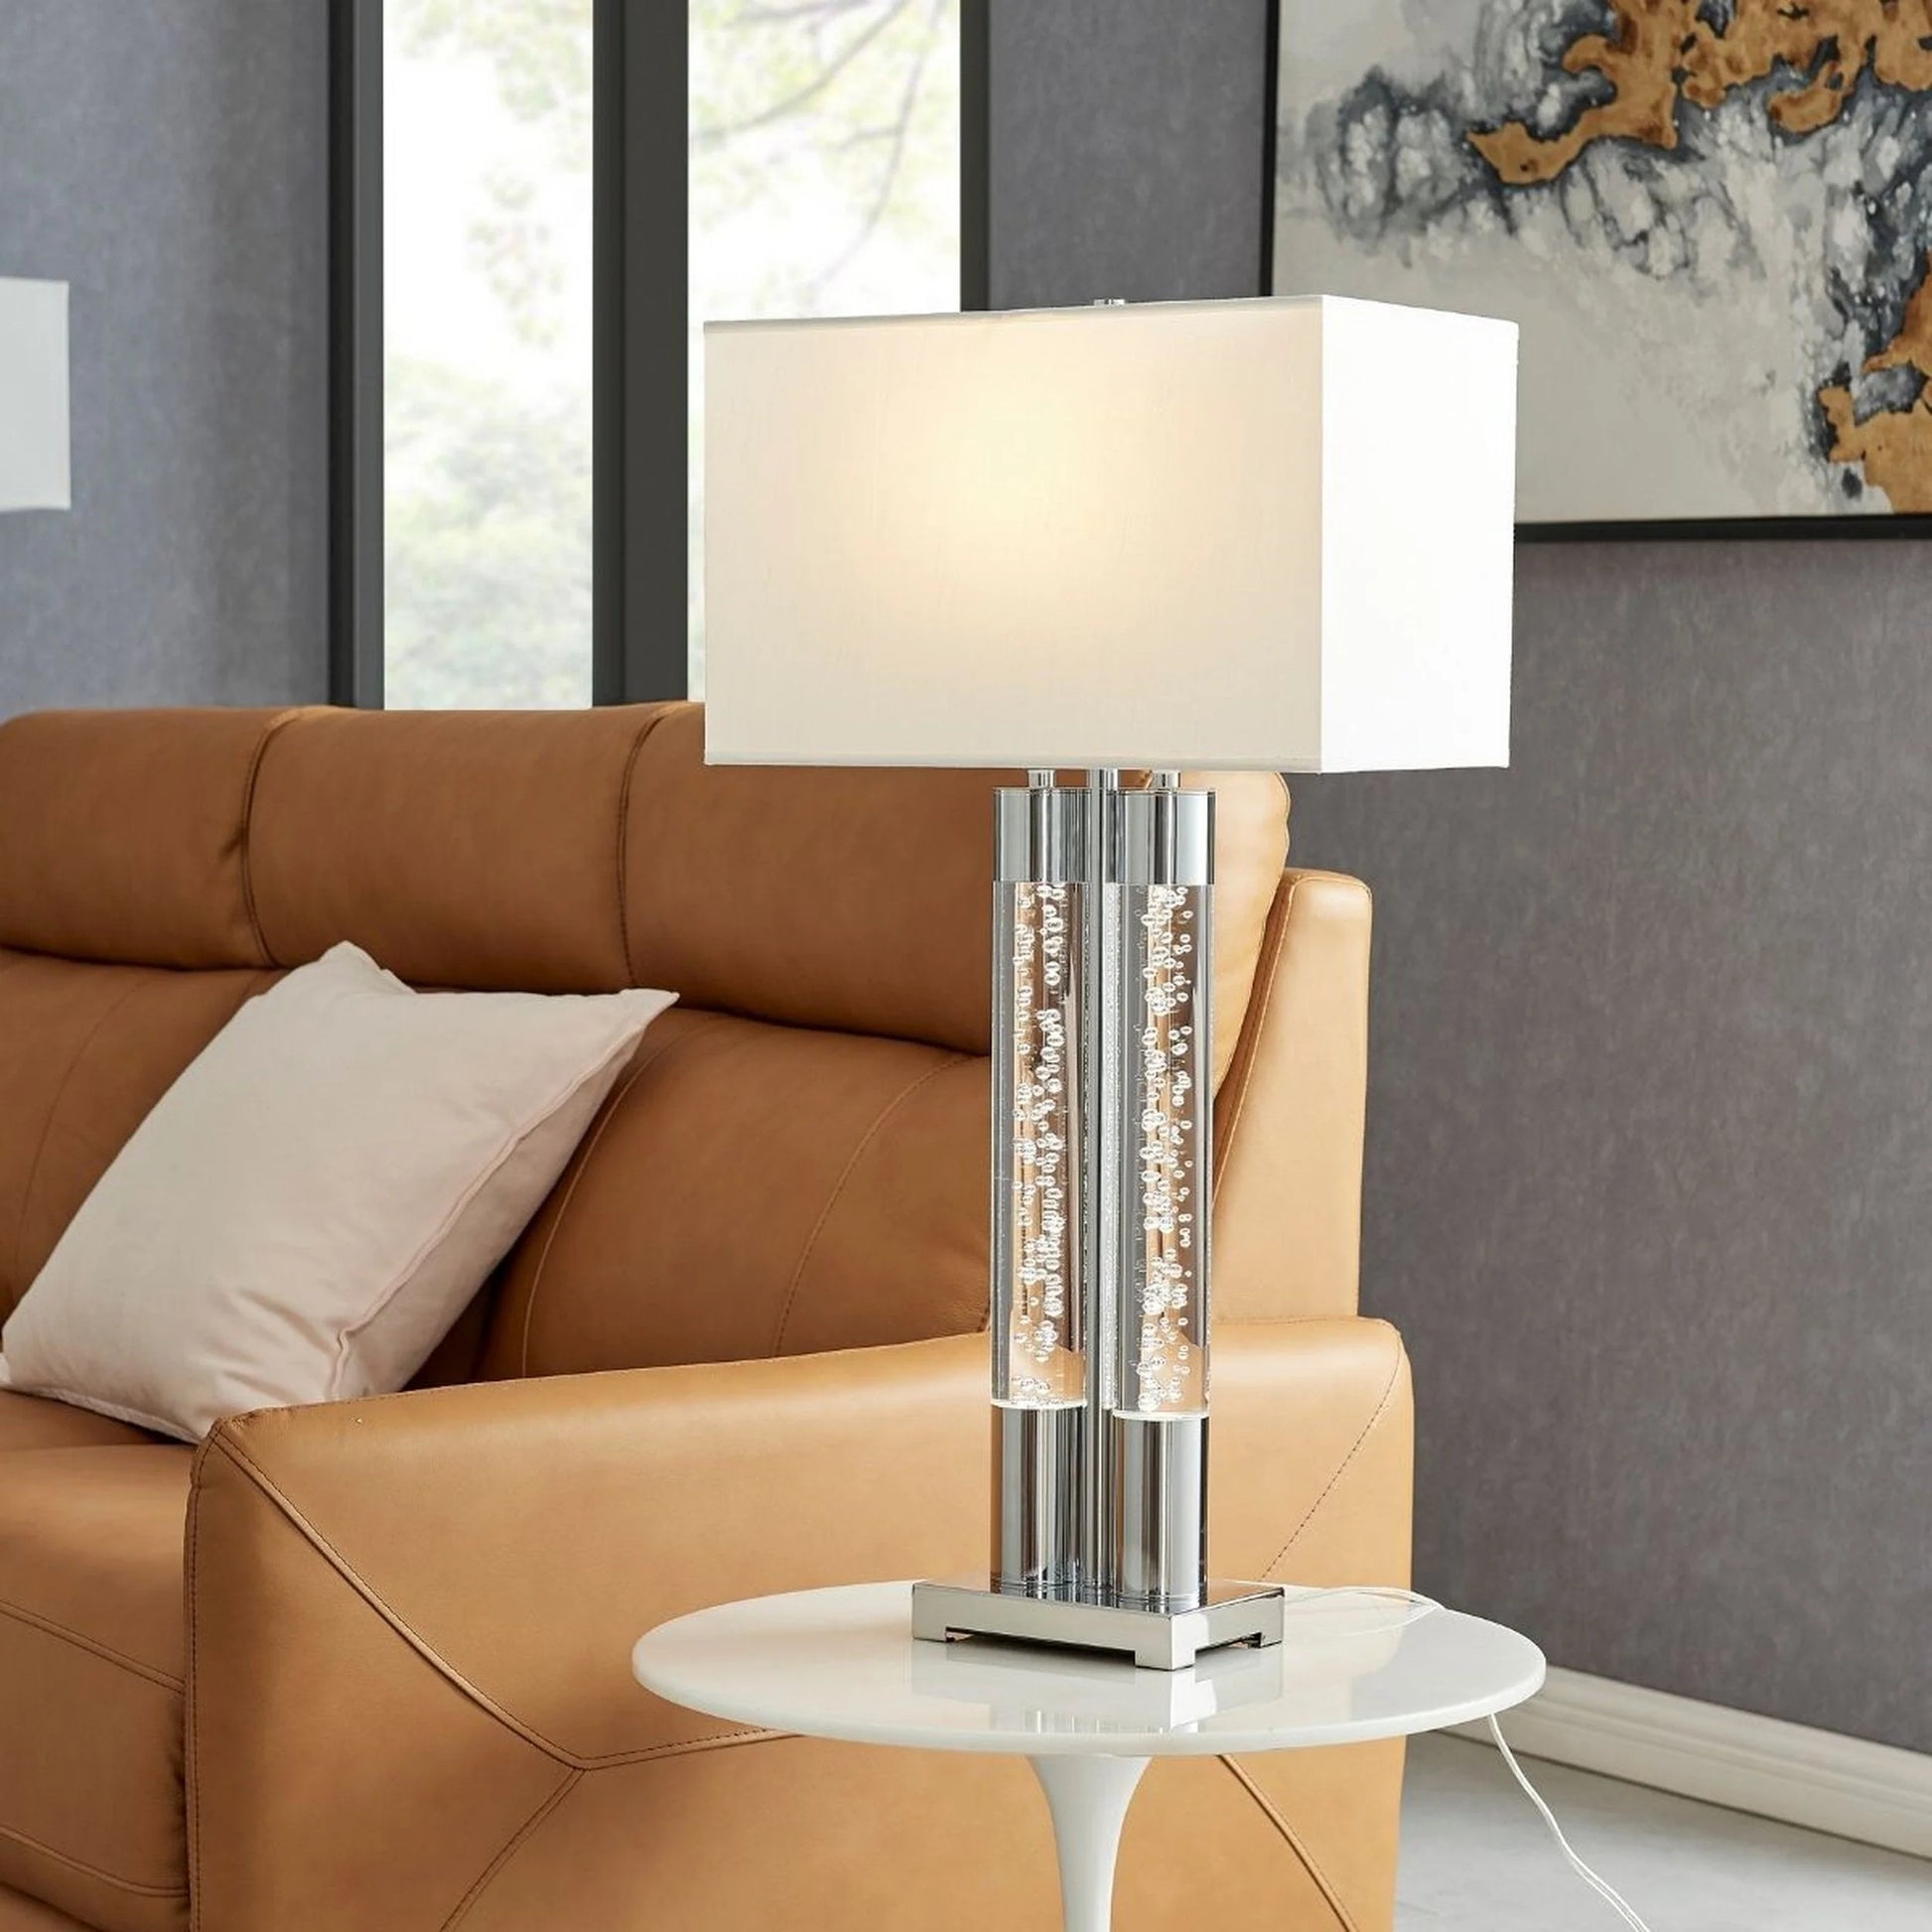 Acrylic Table Lamp in Chrome - Smart Light 2